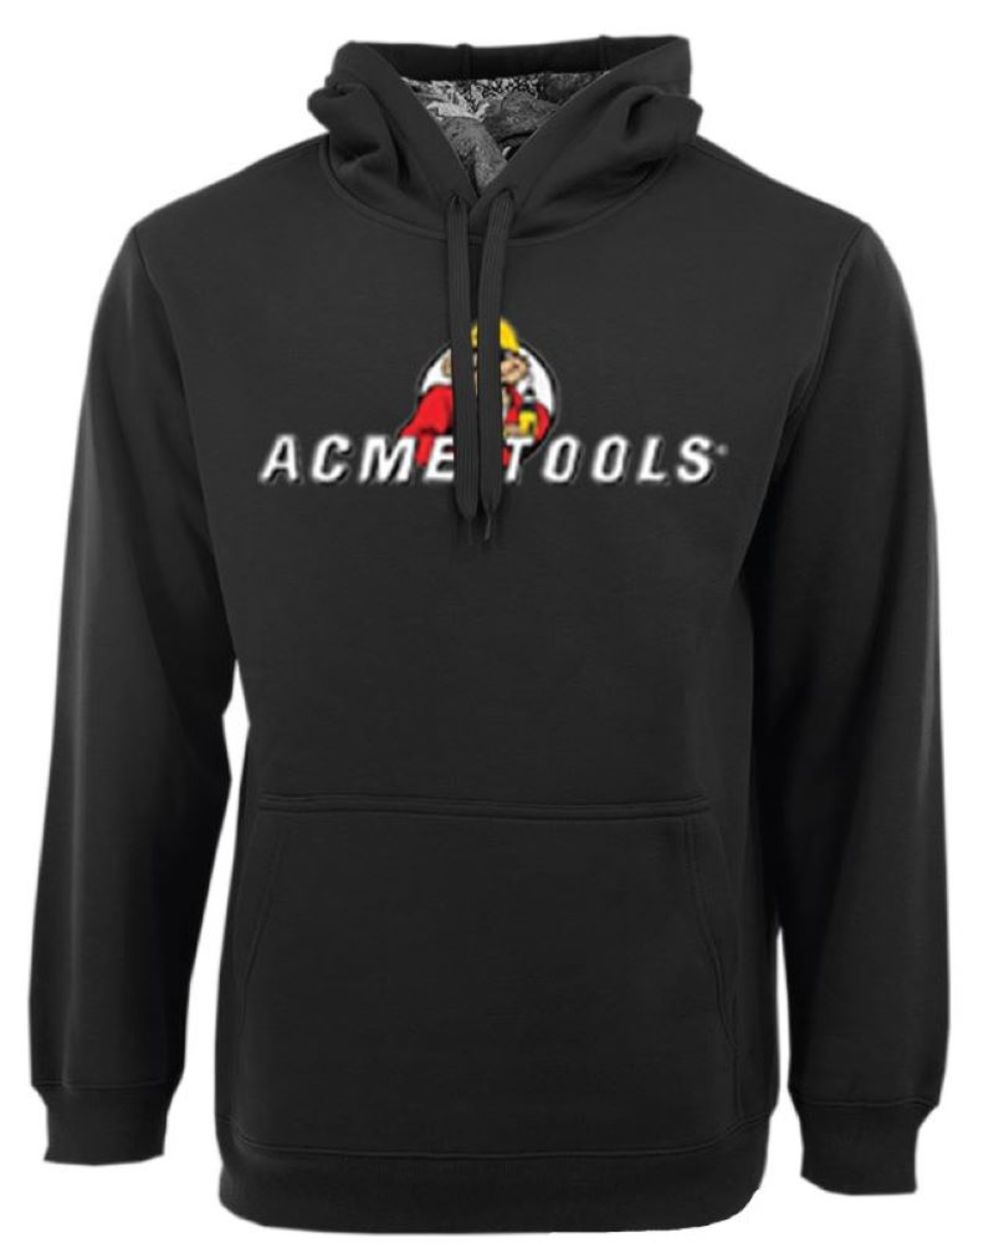 ACME TOOLS CVC Hoodie Fleece Black 8696L044 - Acme Tools